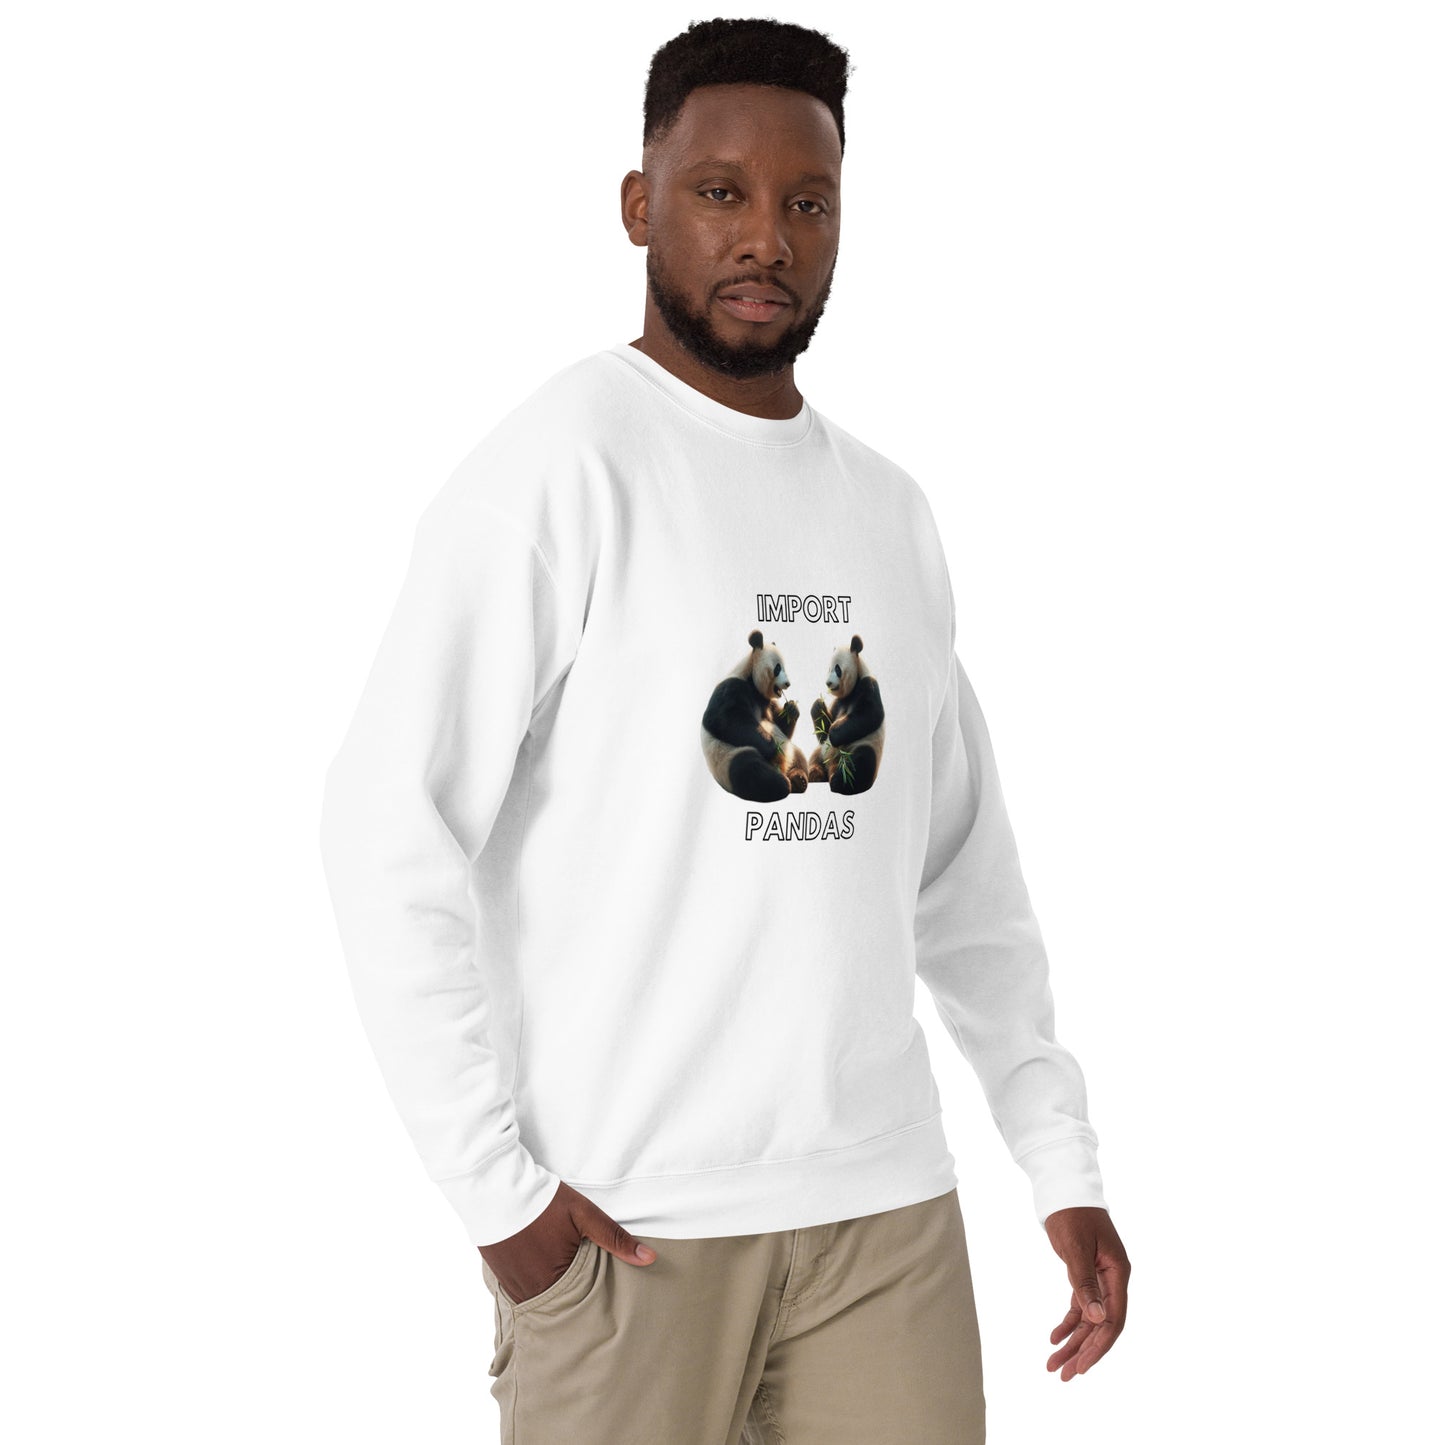 Pandas Import Sweatshirt